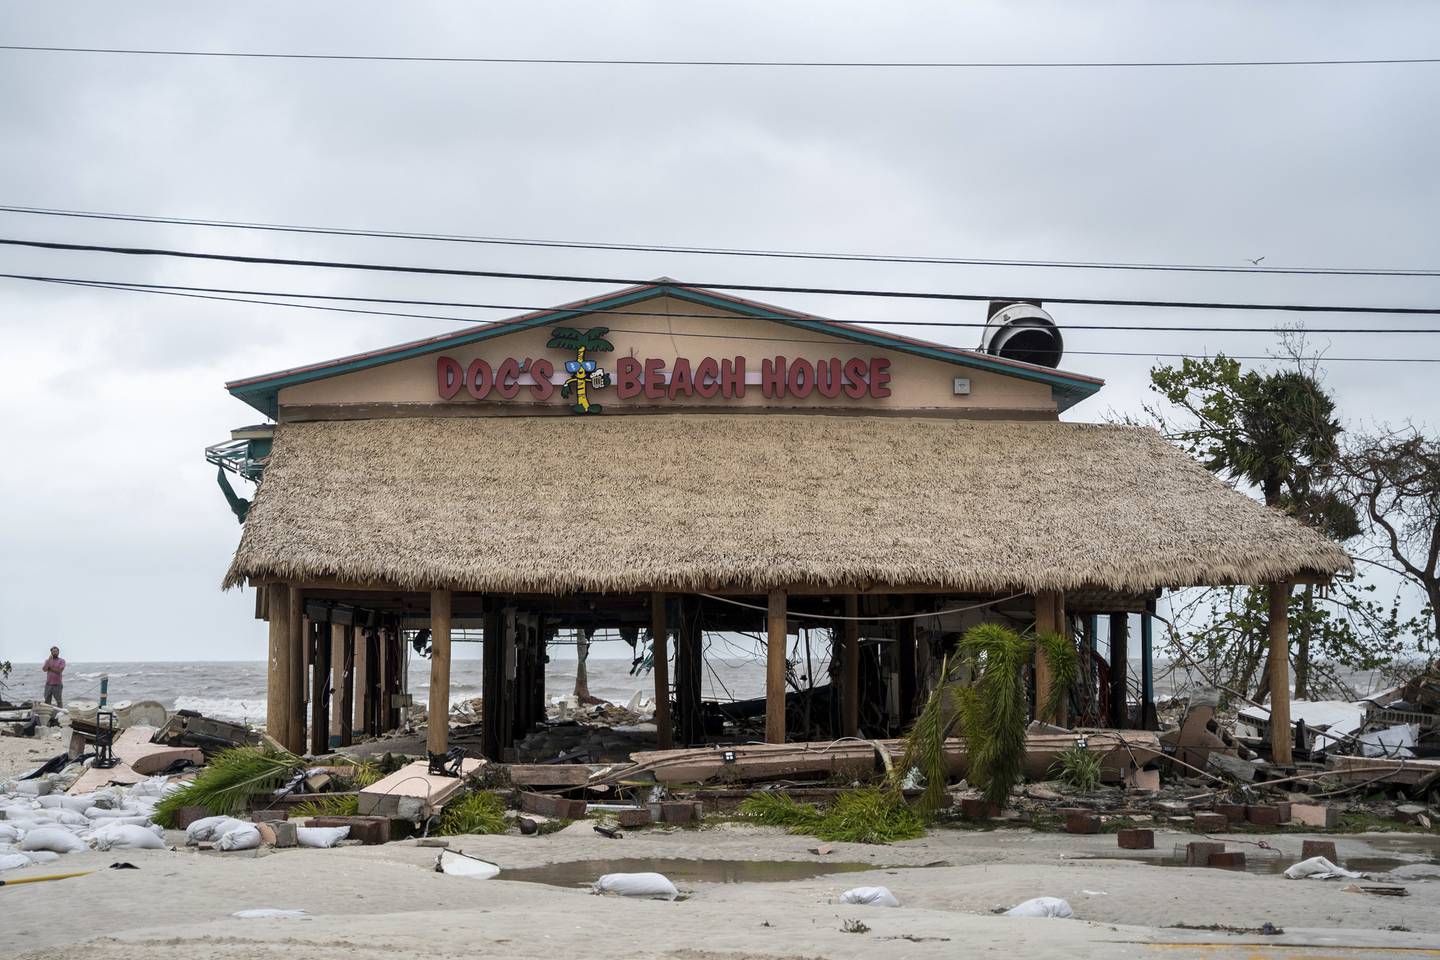 Doc's Beach House after Hurricane Ian on Sept. 29, 2022, in Bonita Springs, Florida. 